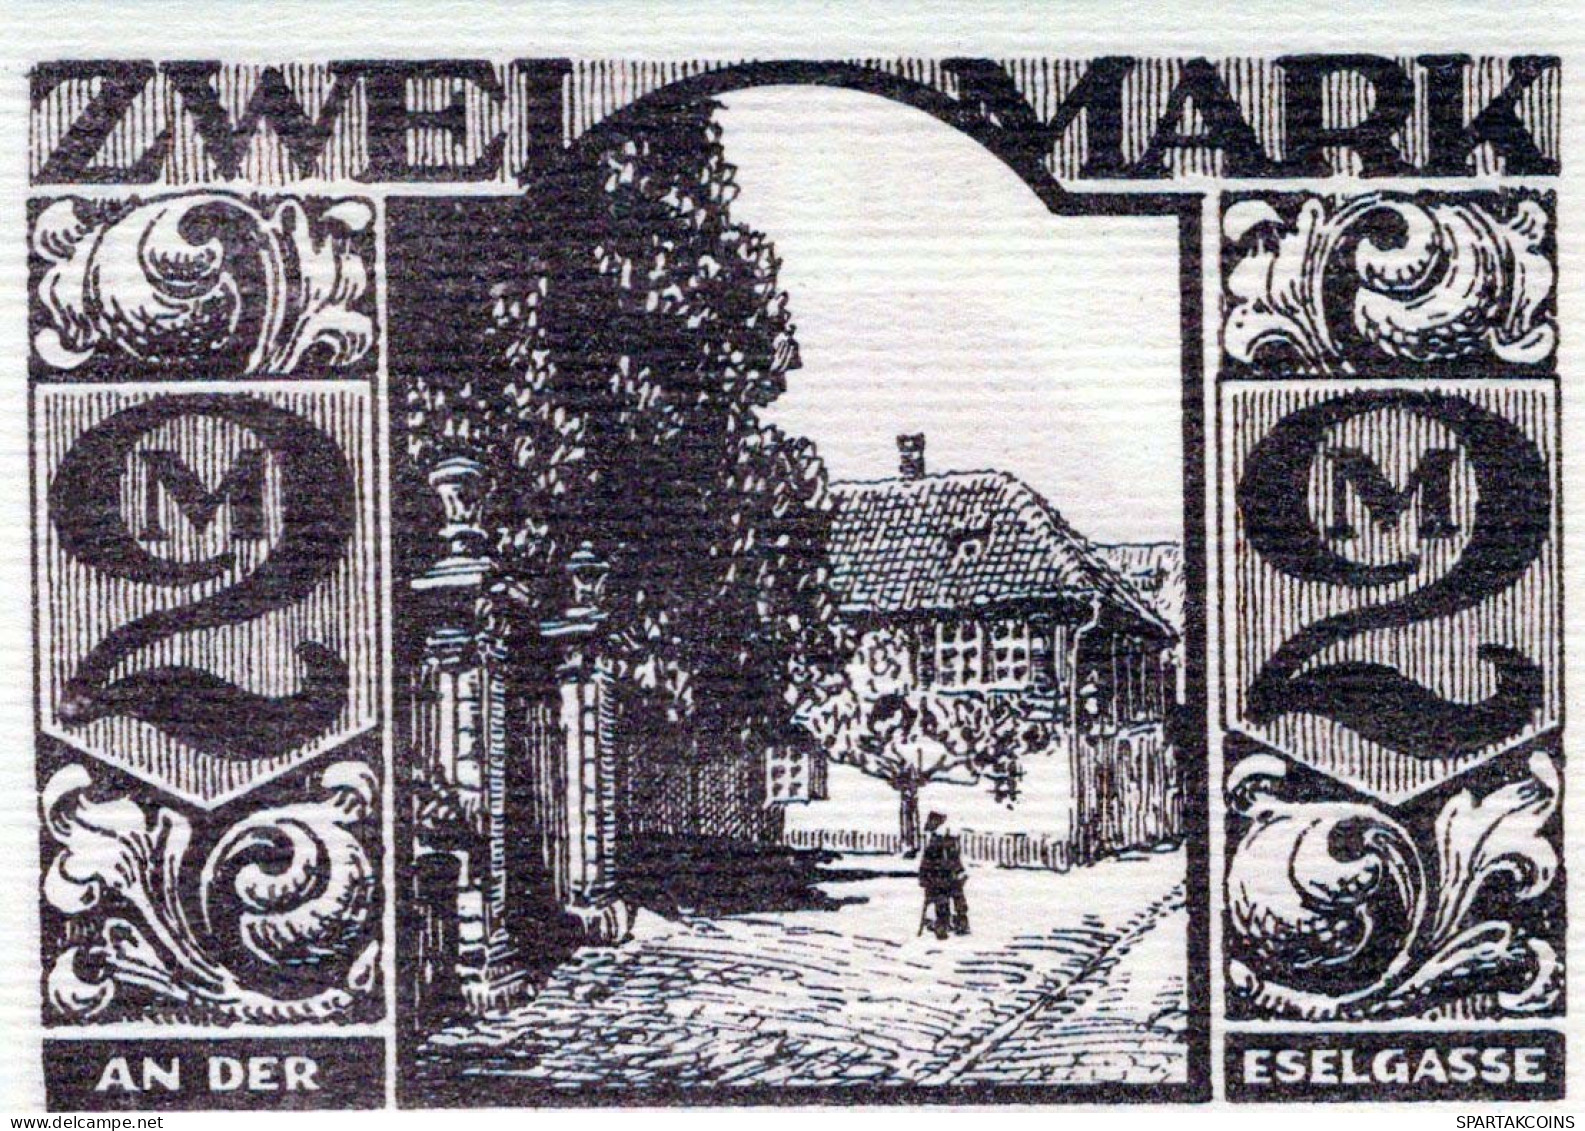 2 MARK 1921 Stadt PADERBORN Westphalia UNC DEUTSCHLAND Notgeld Banknote #PB440 - [11] Local Banknote Issues